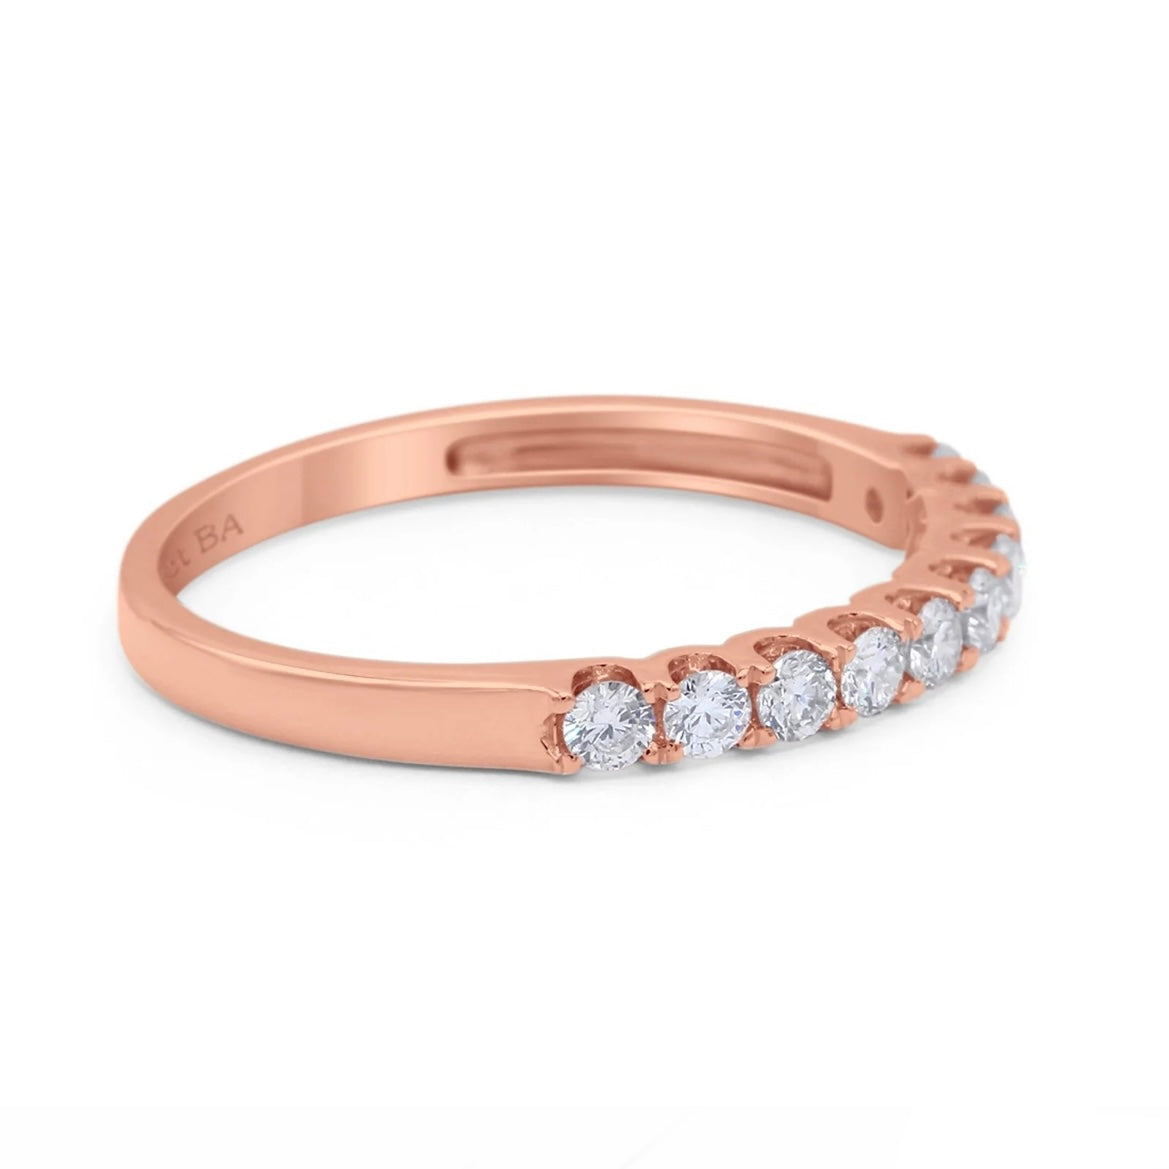 14K Gold Shared Prong Diamond Wedding Ring